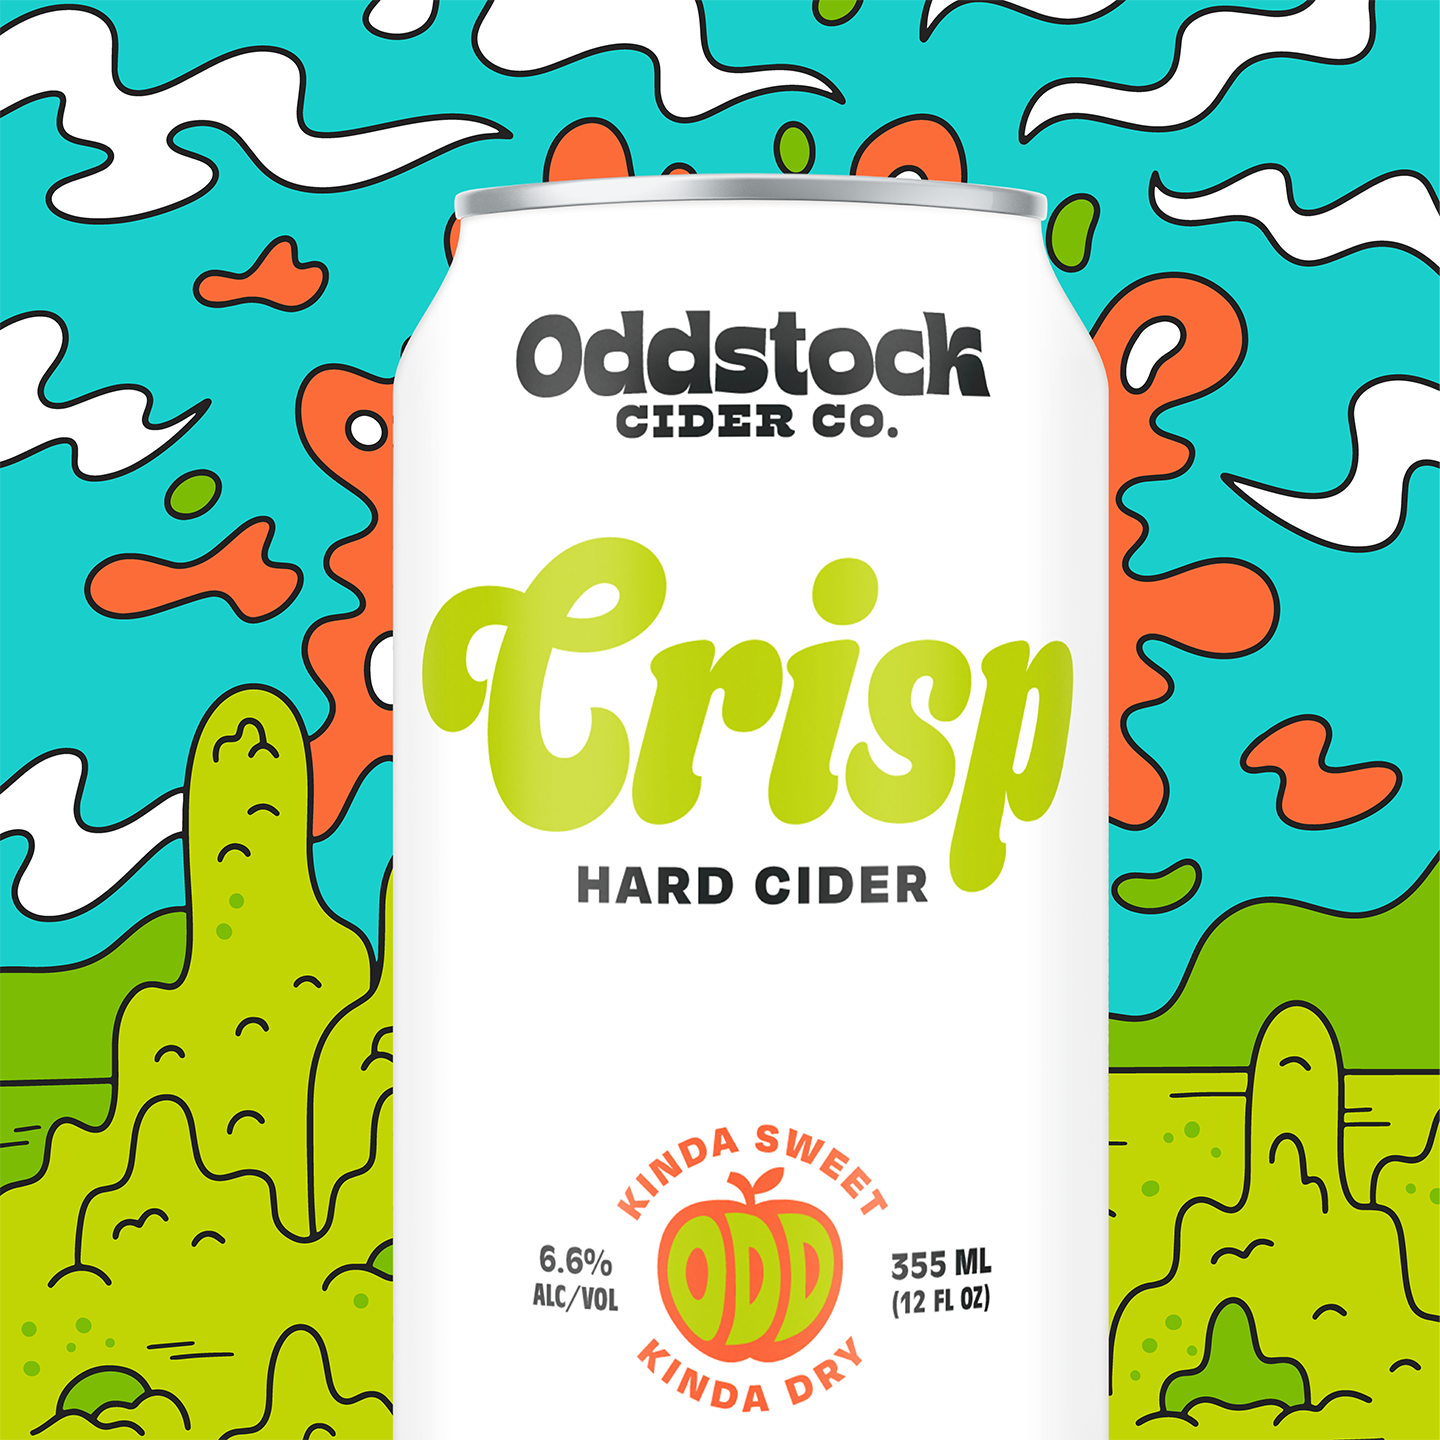 Oddstock Cider Co.